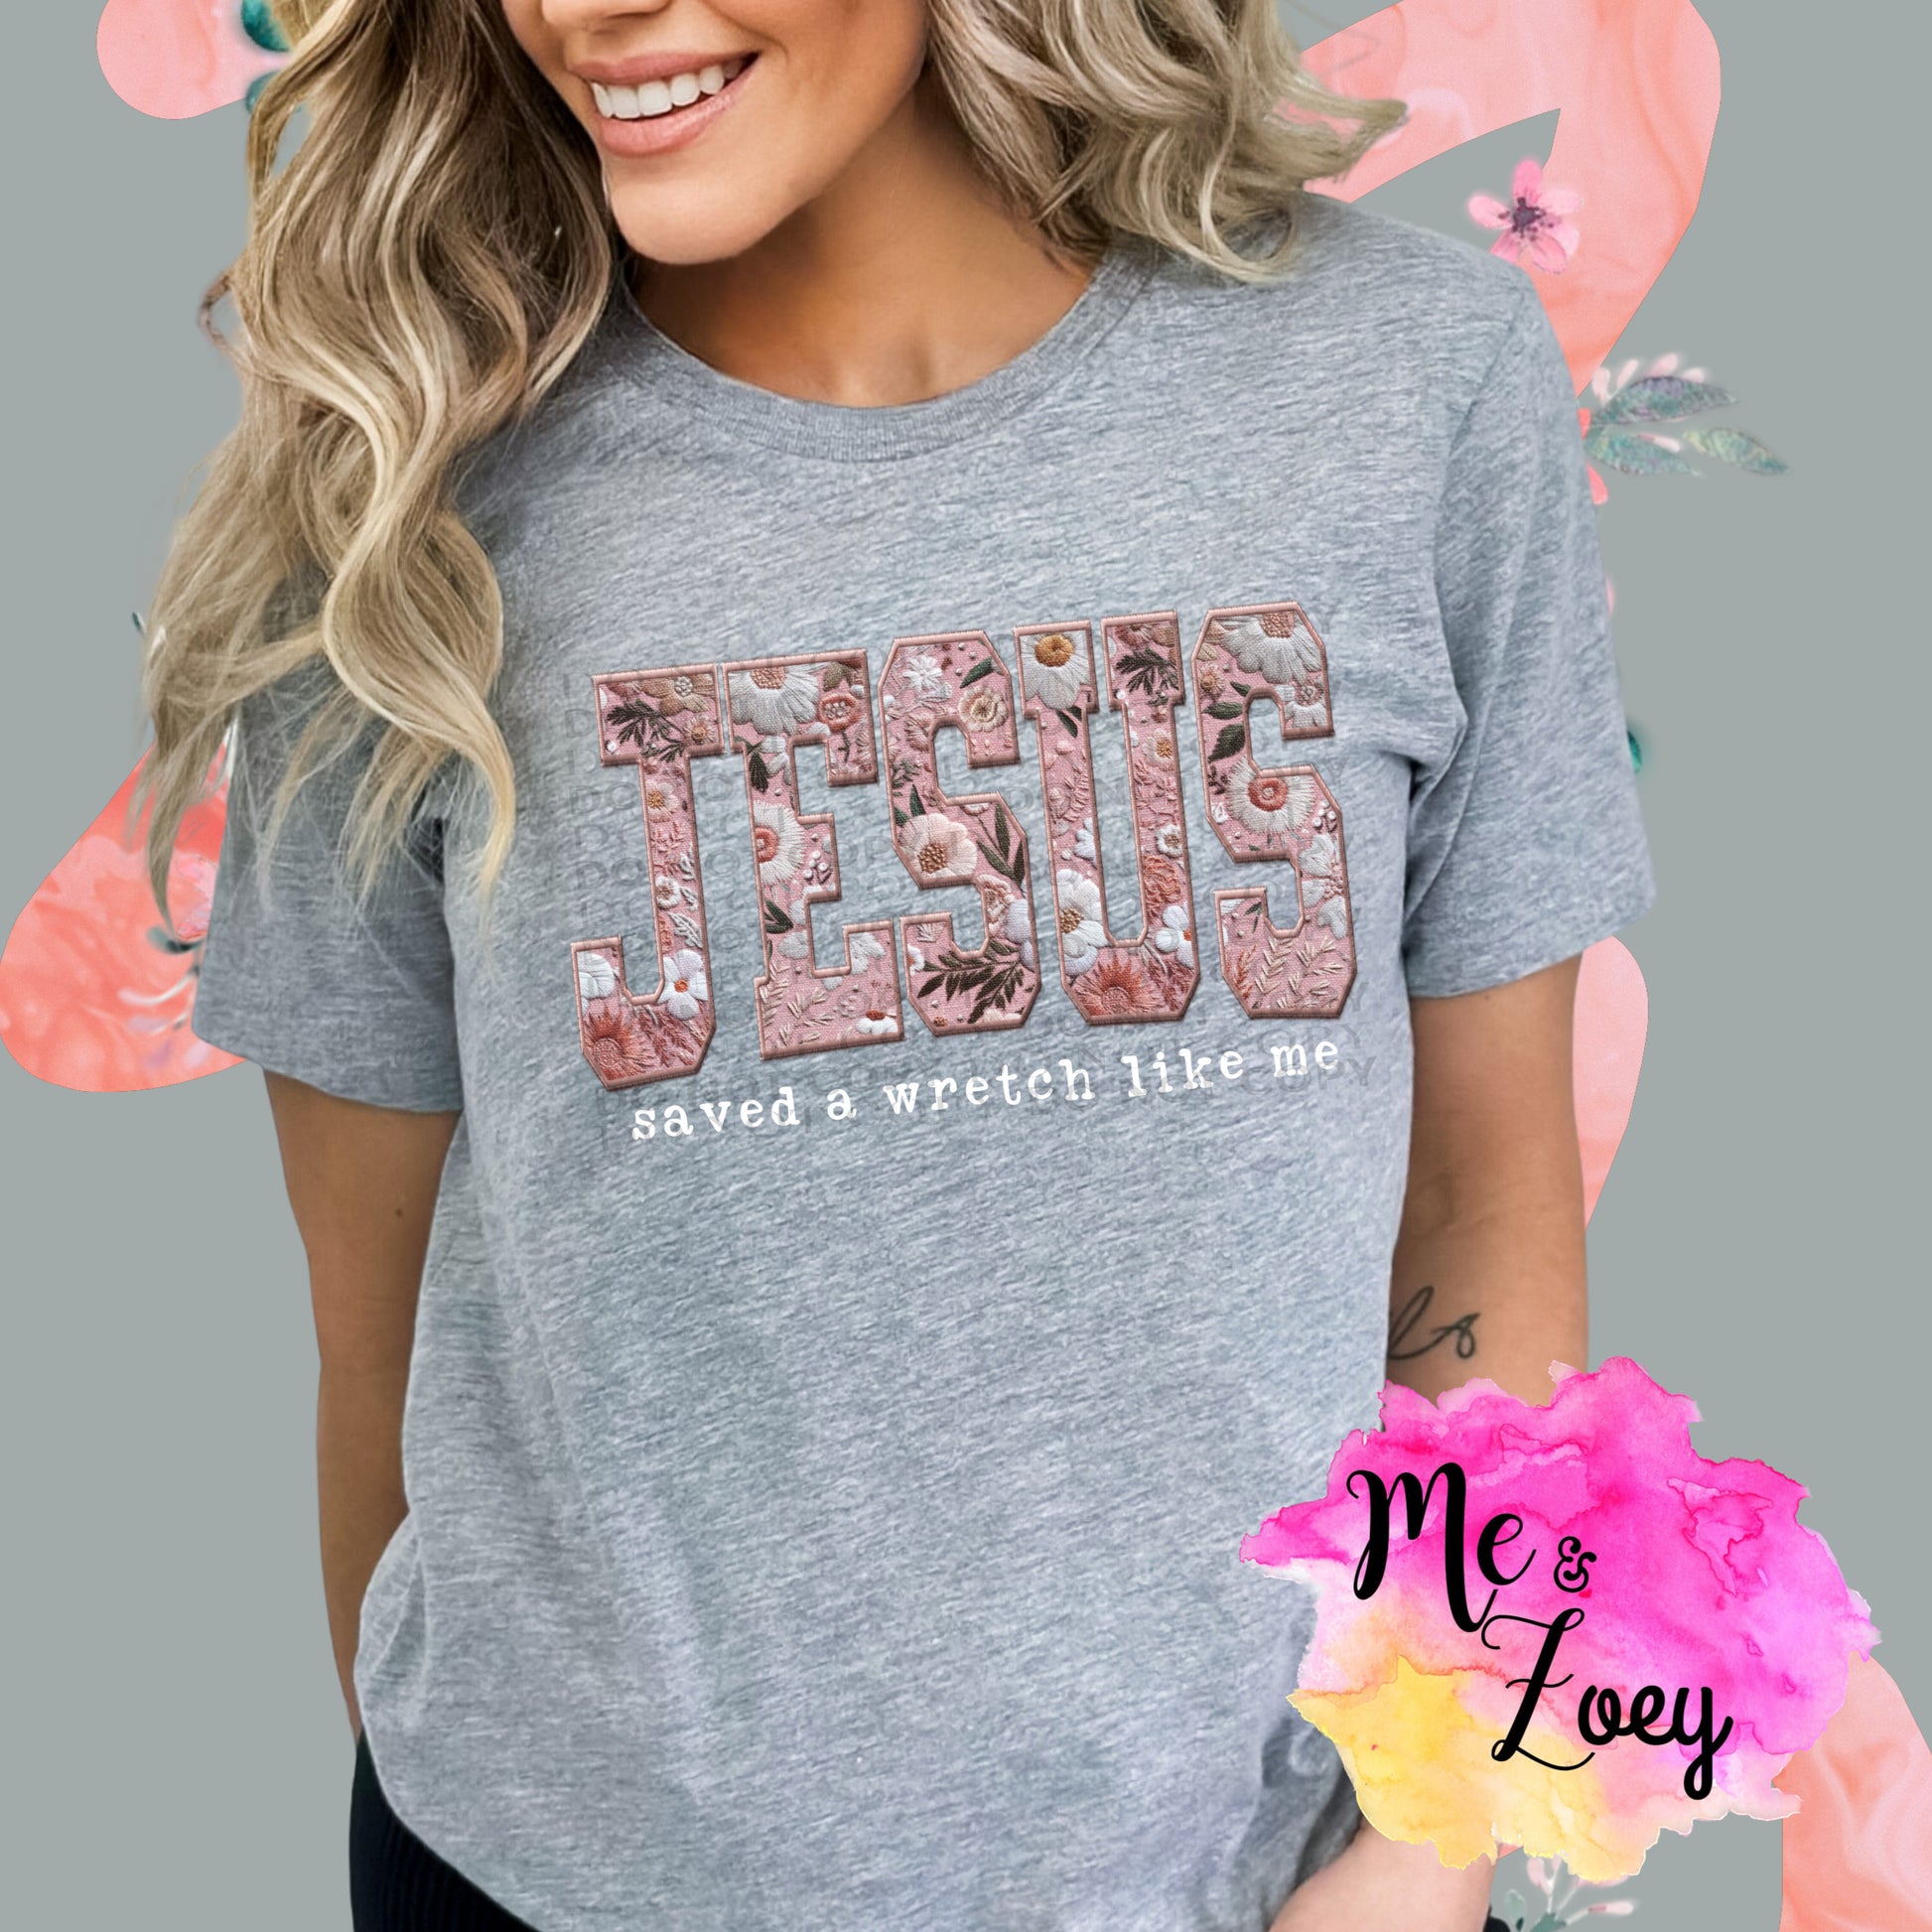 Jesus Saved A Wretch Like Me Graphic tee - MeAndZoey